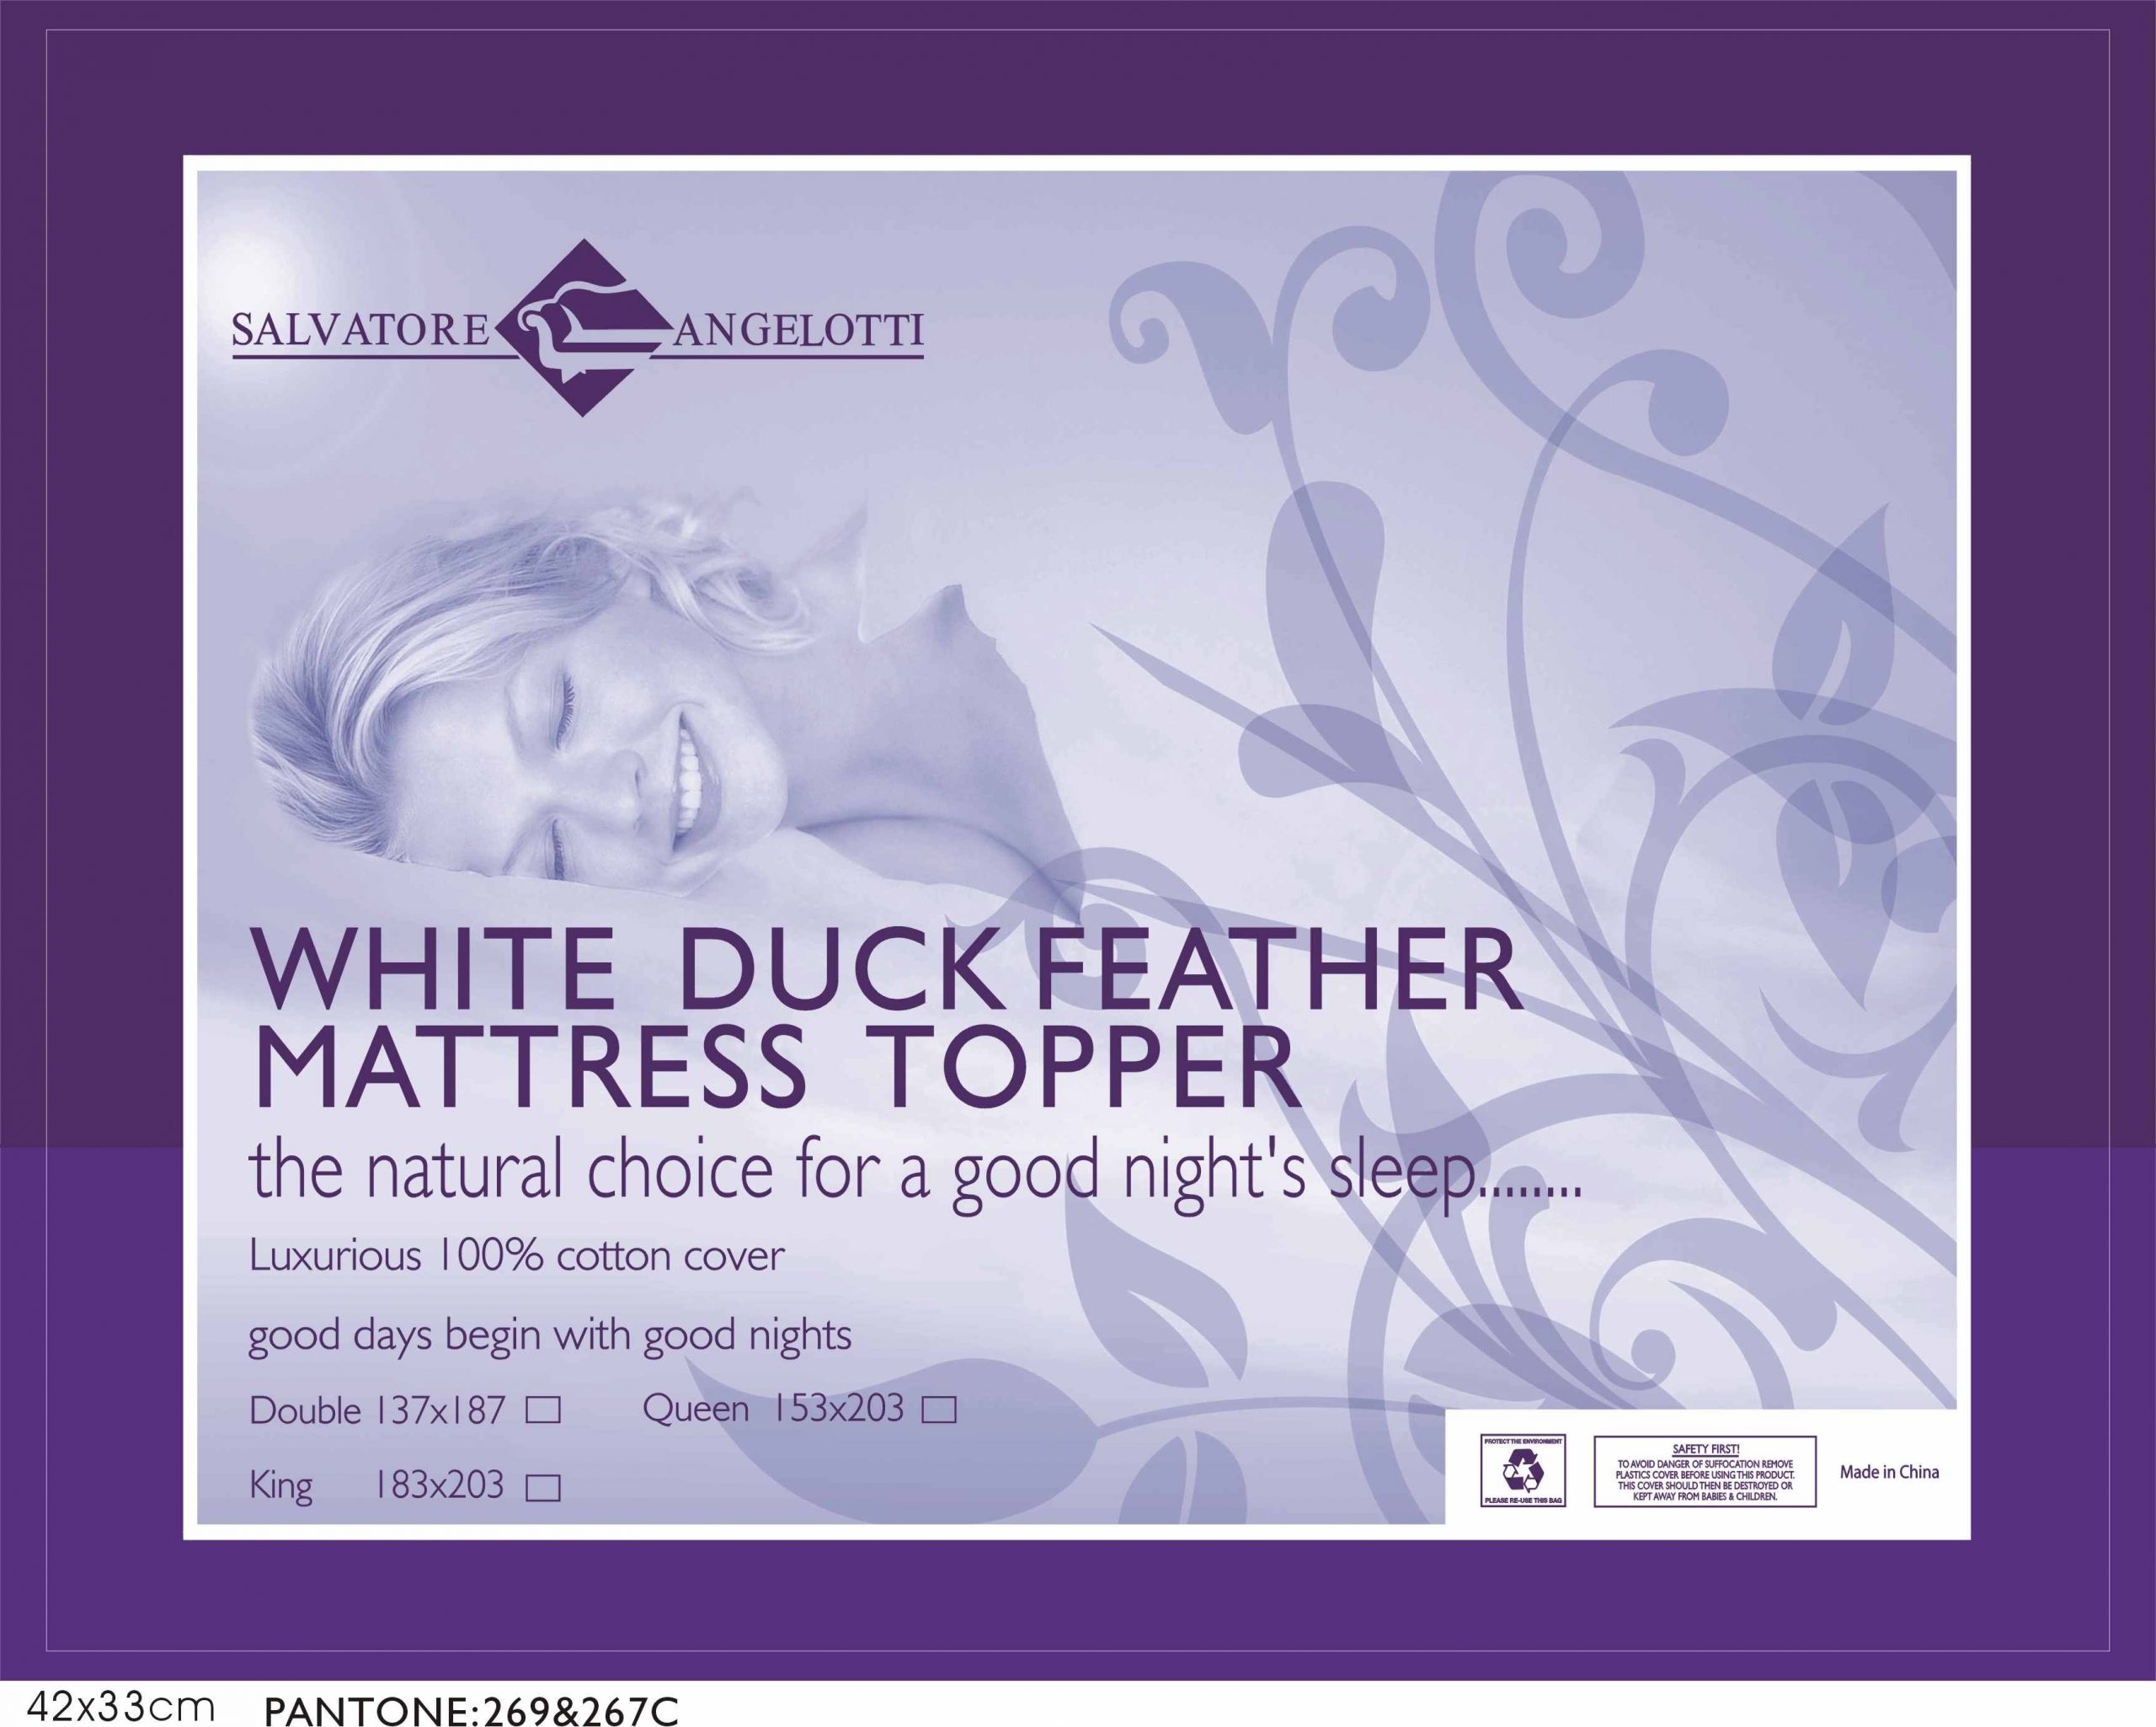 100% White Duck Feather Mattress Topper King Single